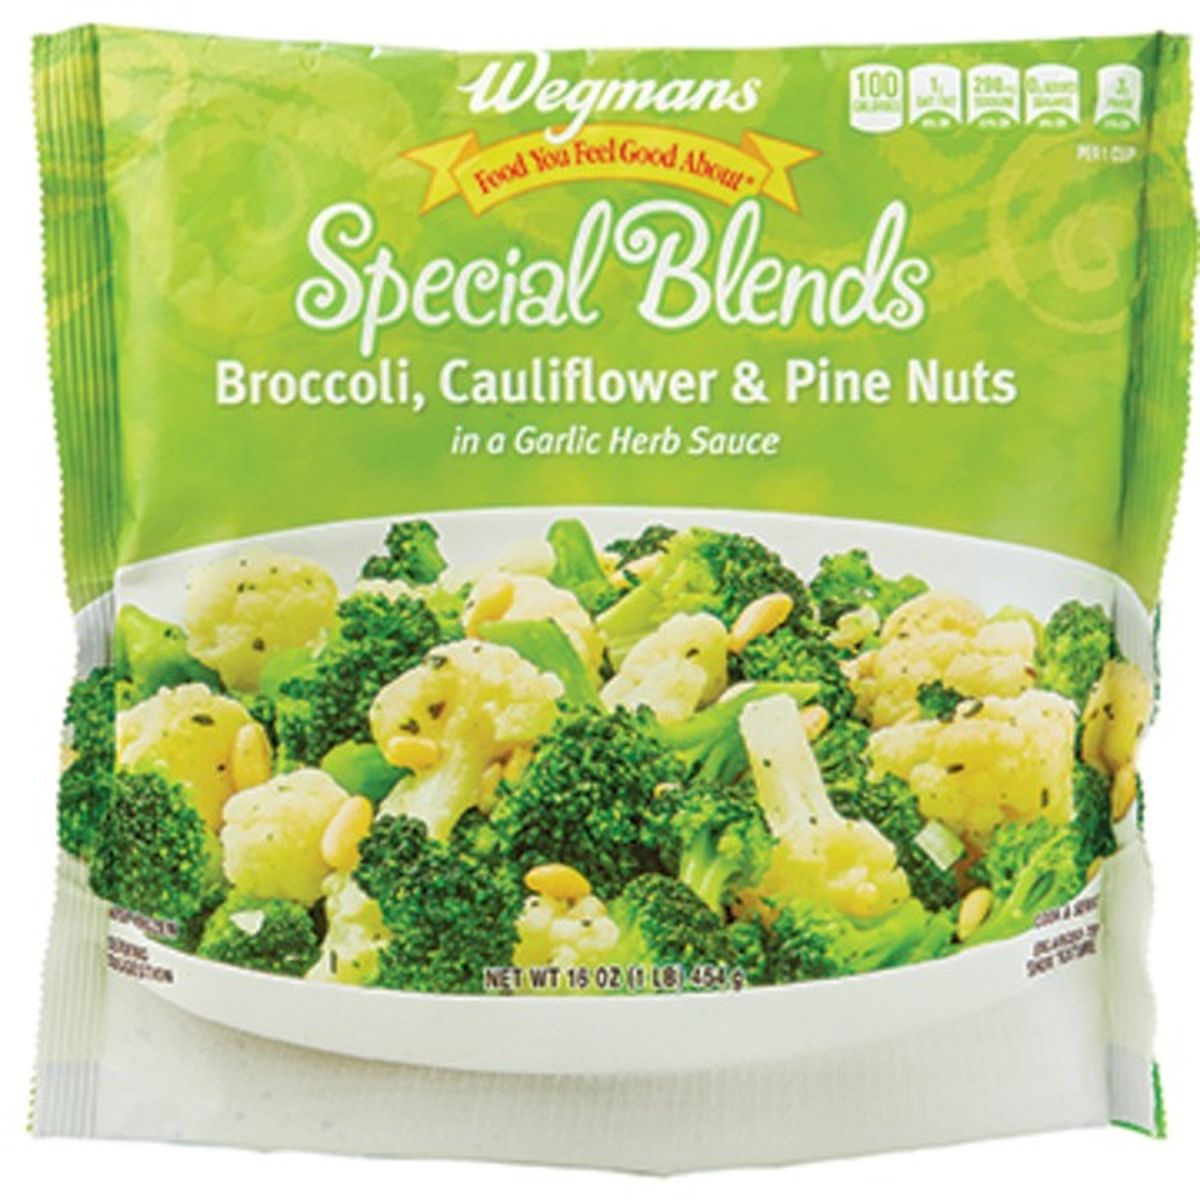 Calories in Wegmans Special Blends Broccoli, Cauliflower & Pine Nuts